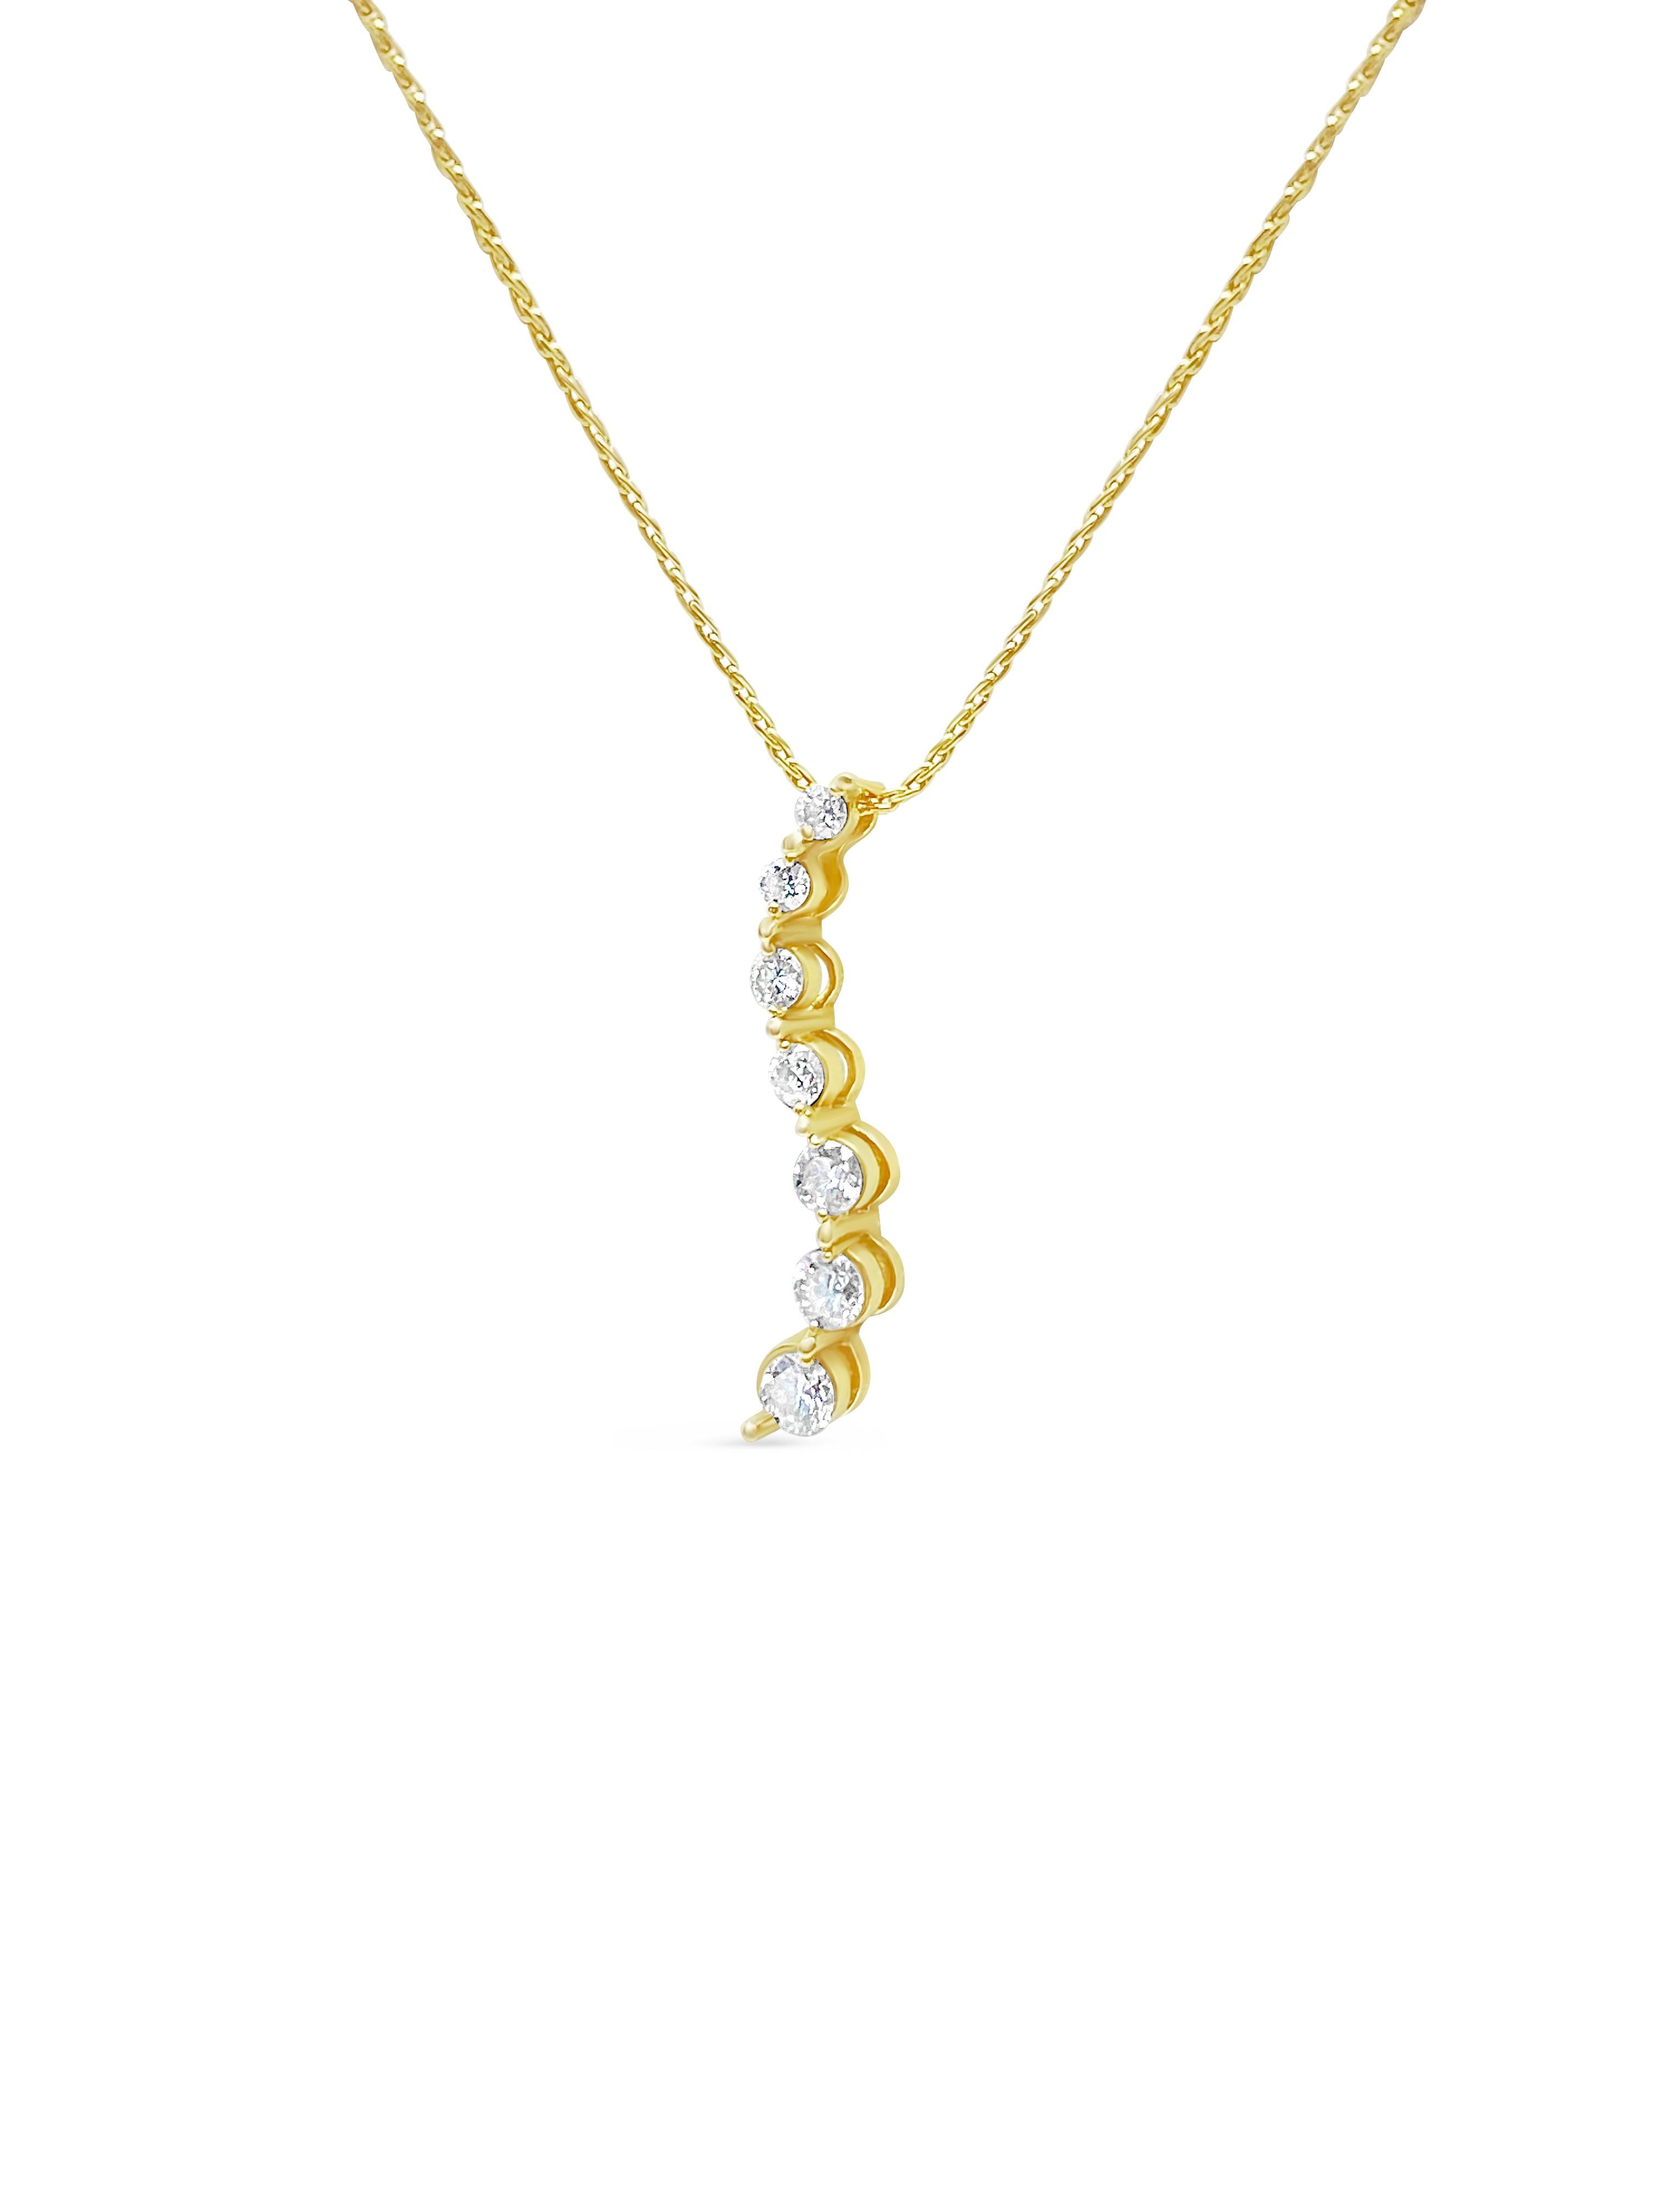 Women's Vintage 0.80 Carat Diamond Pendant Necklace For Her For Sale